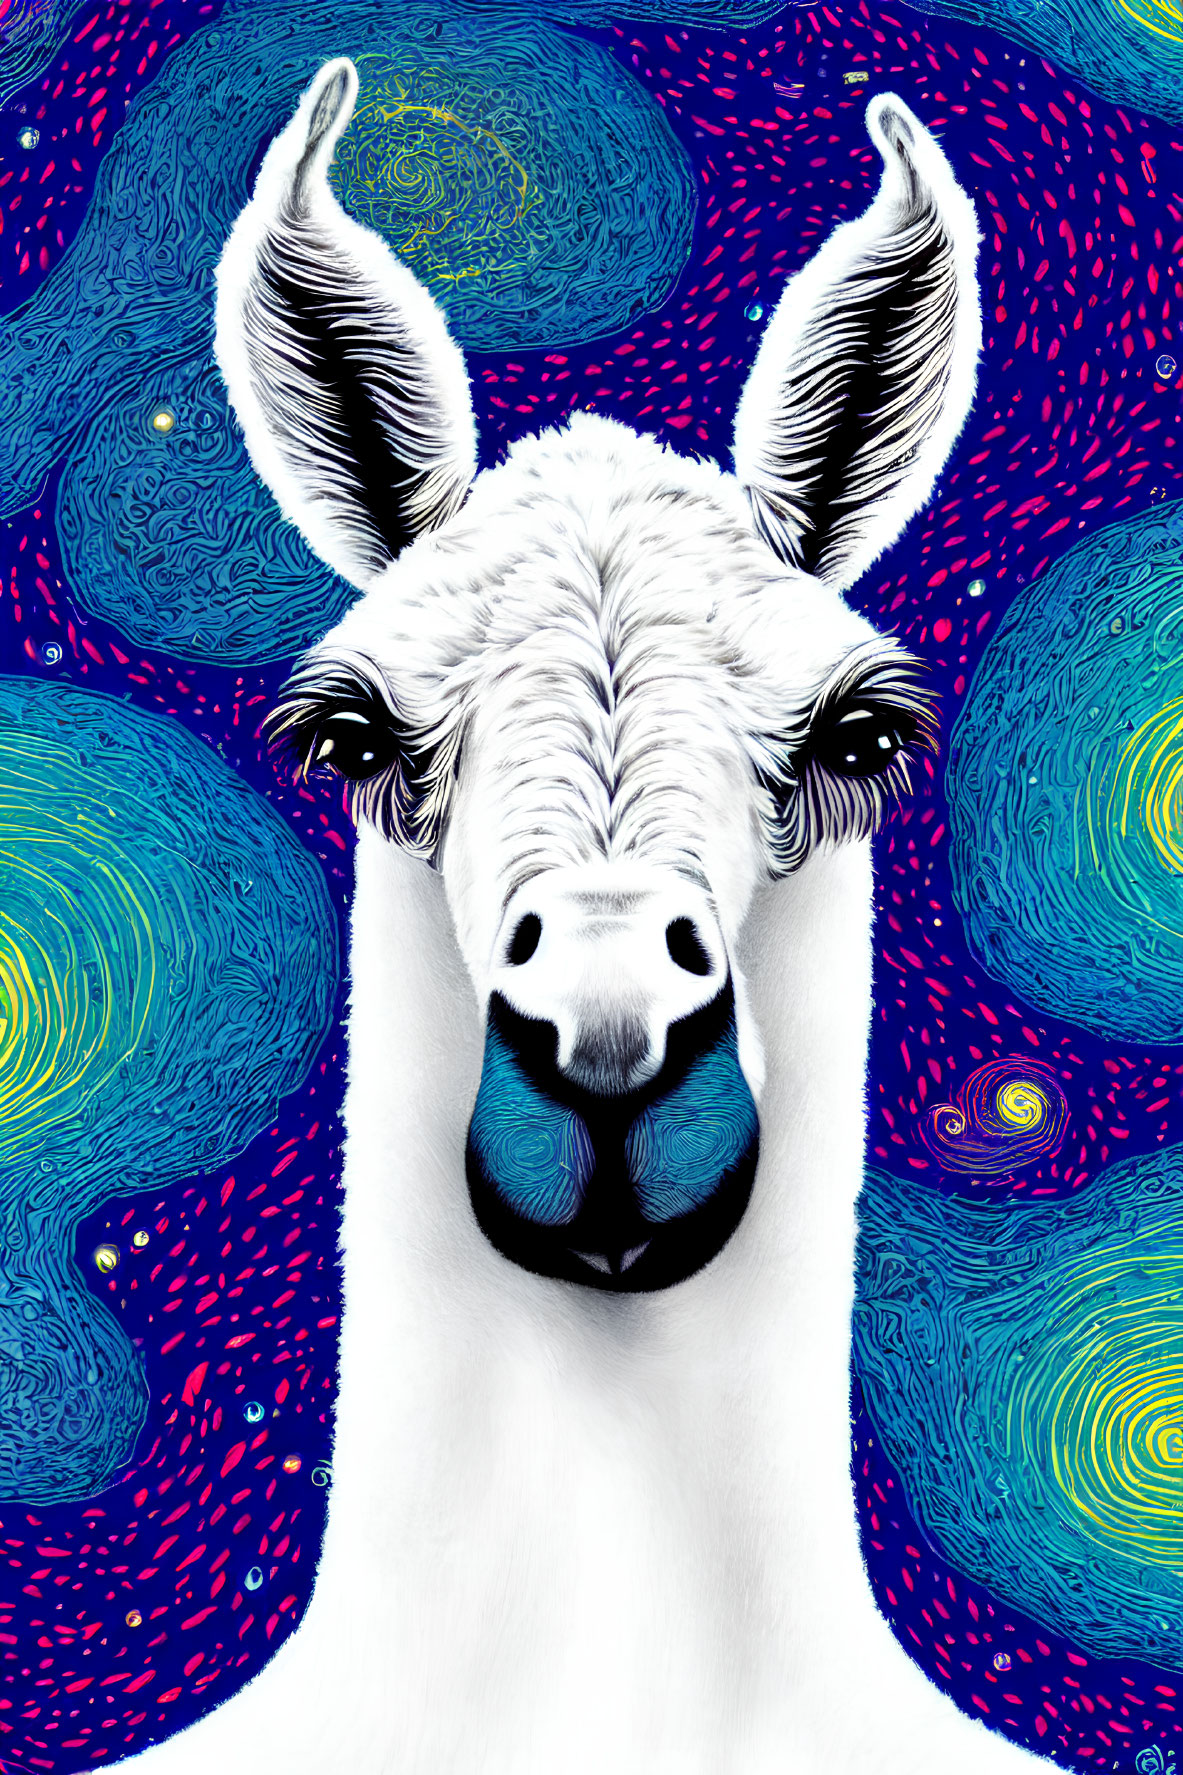 White llama illustration with whimsical starry night sky background.